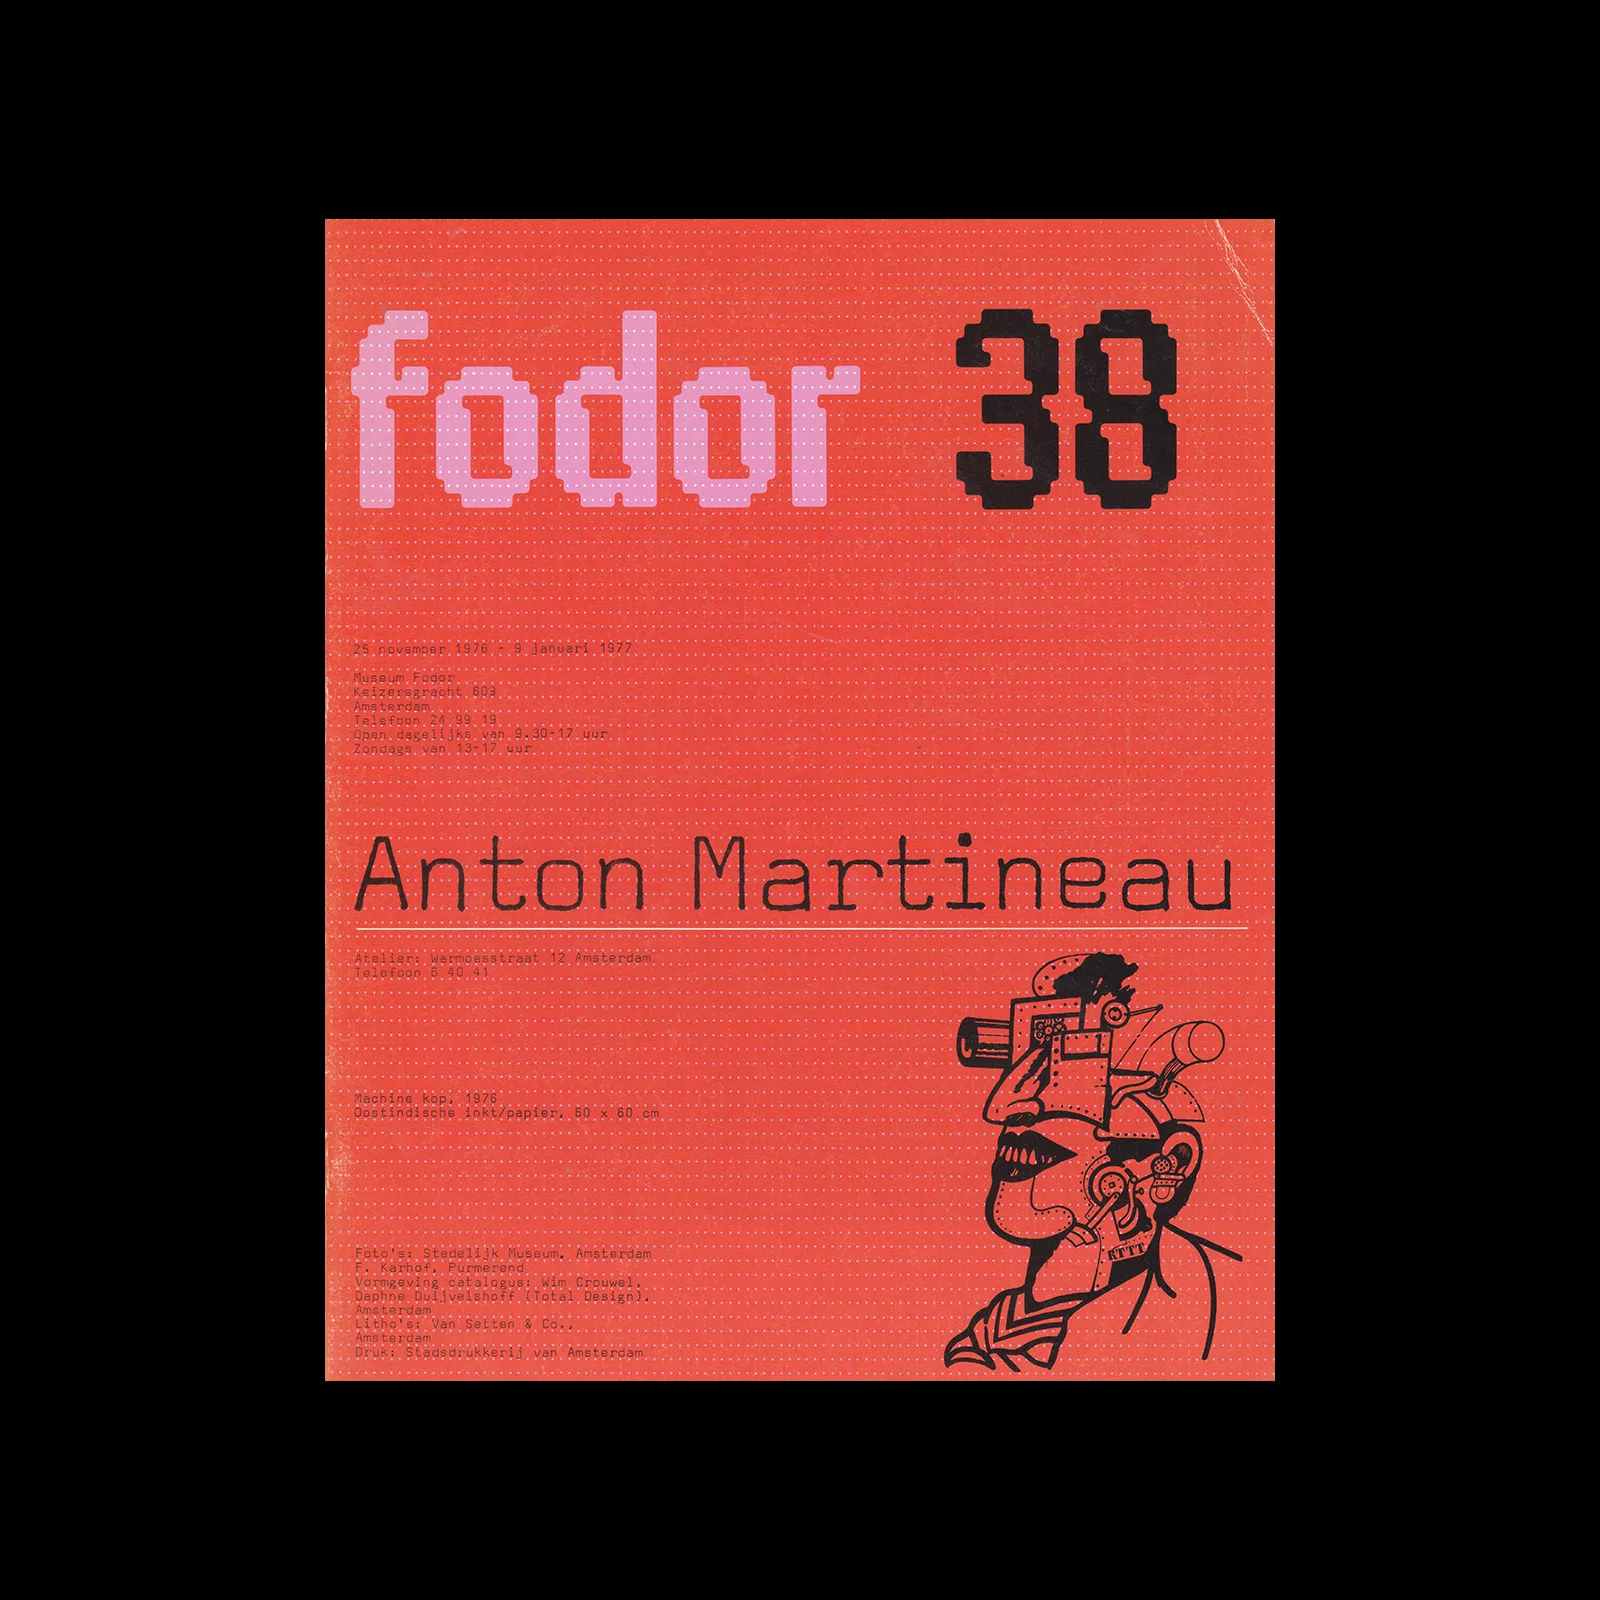 Fodor 38, 1977 - Anton Martineau. Designed by Wim Crouwel and Daphne Duijvelshoff (Total Design)